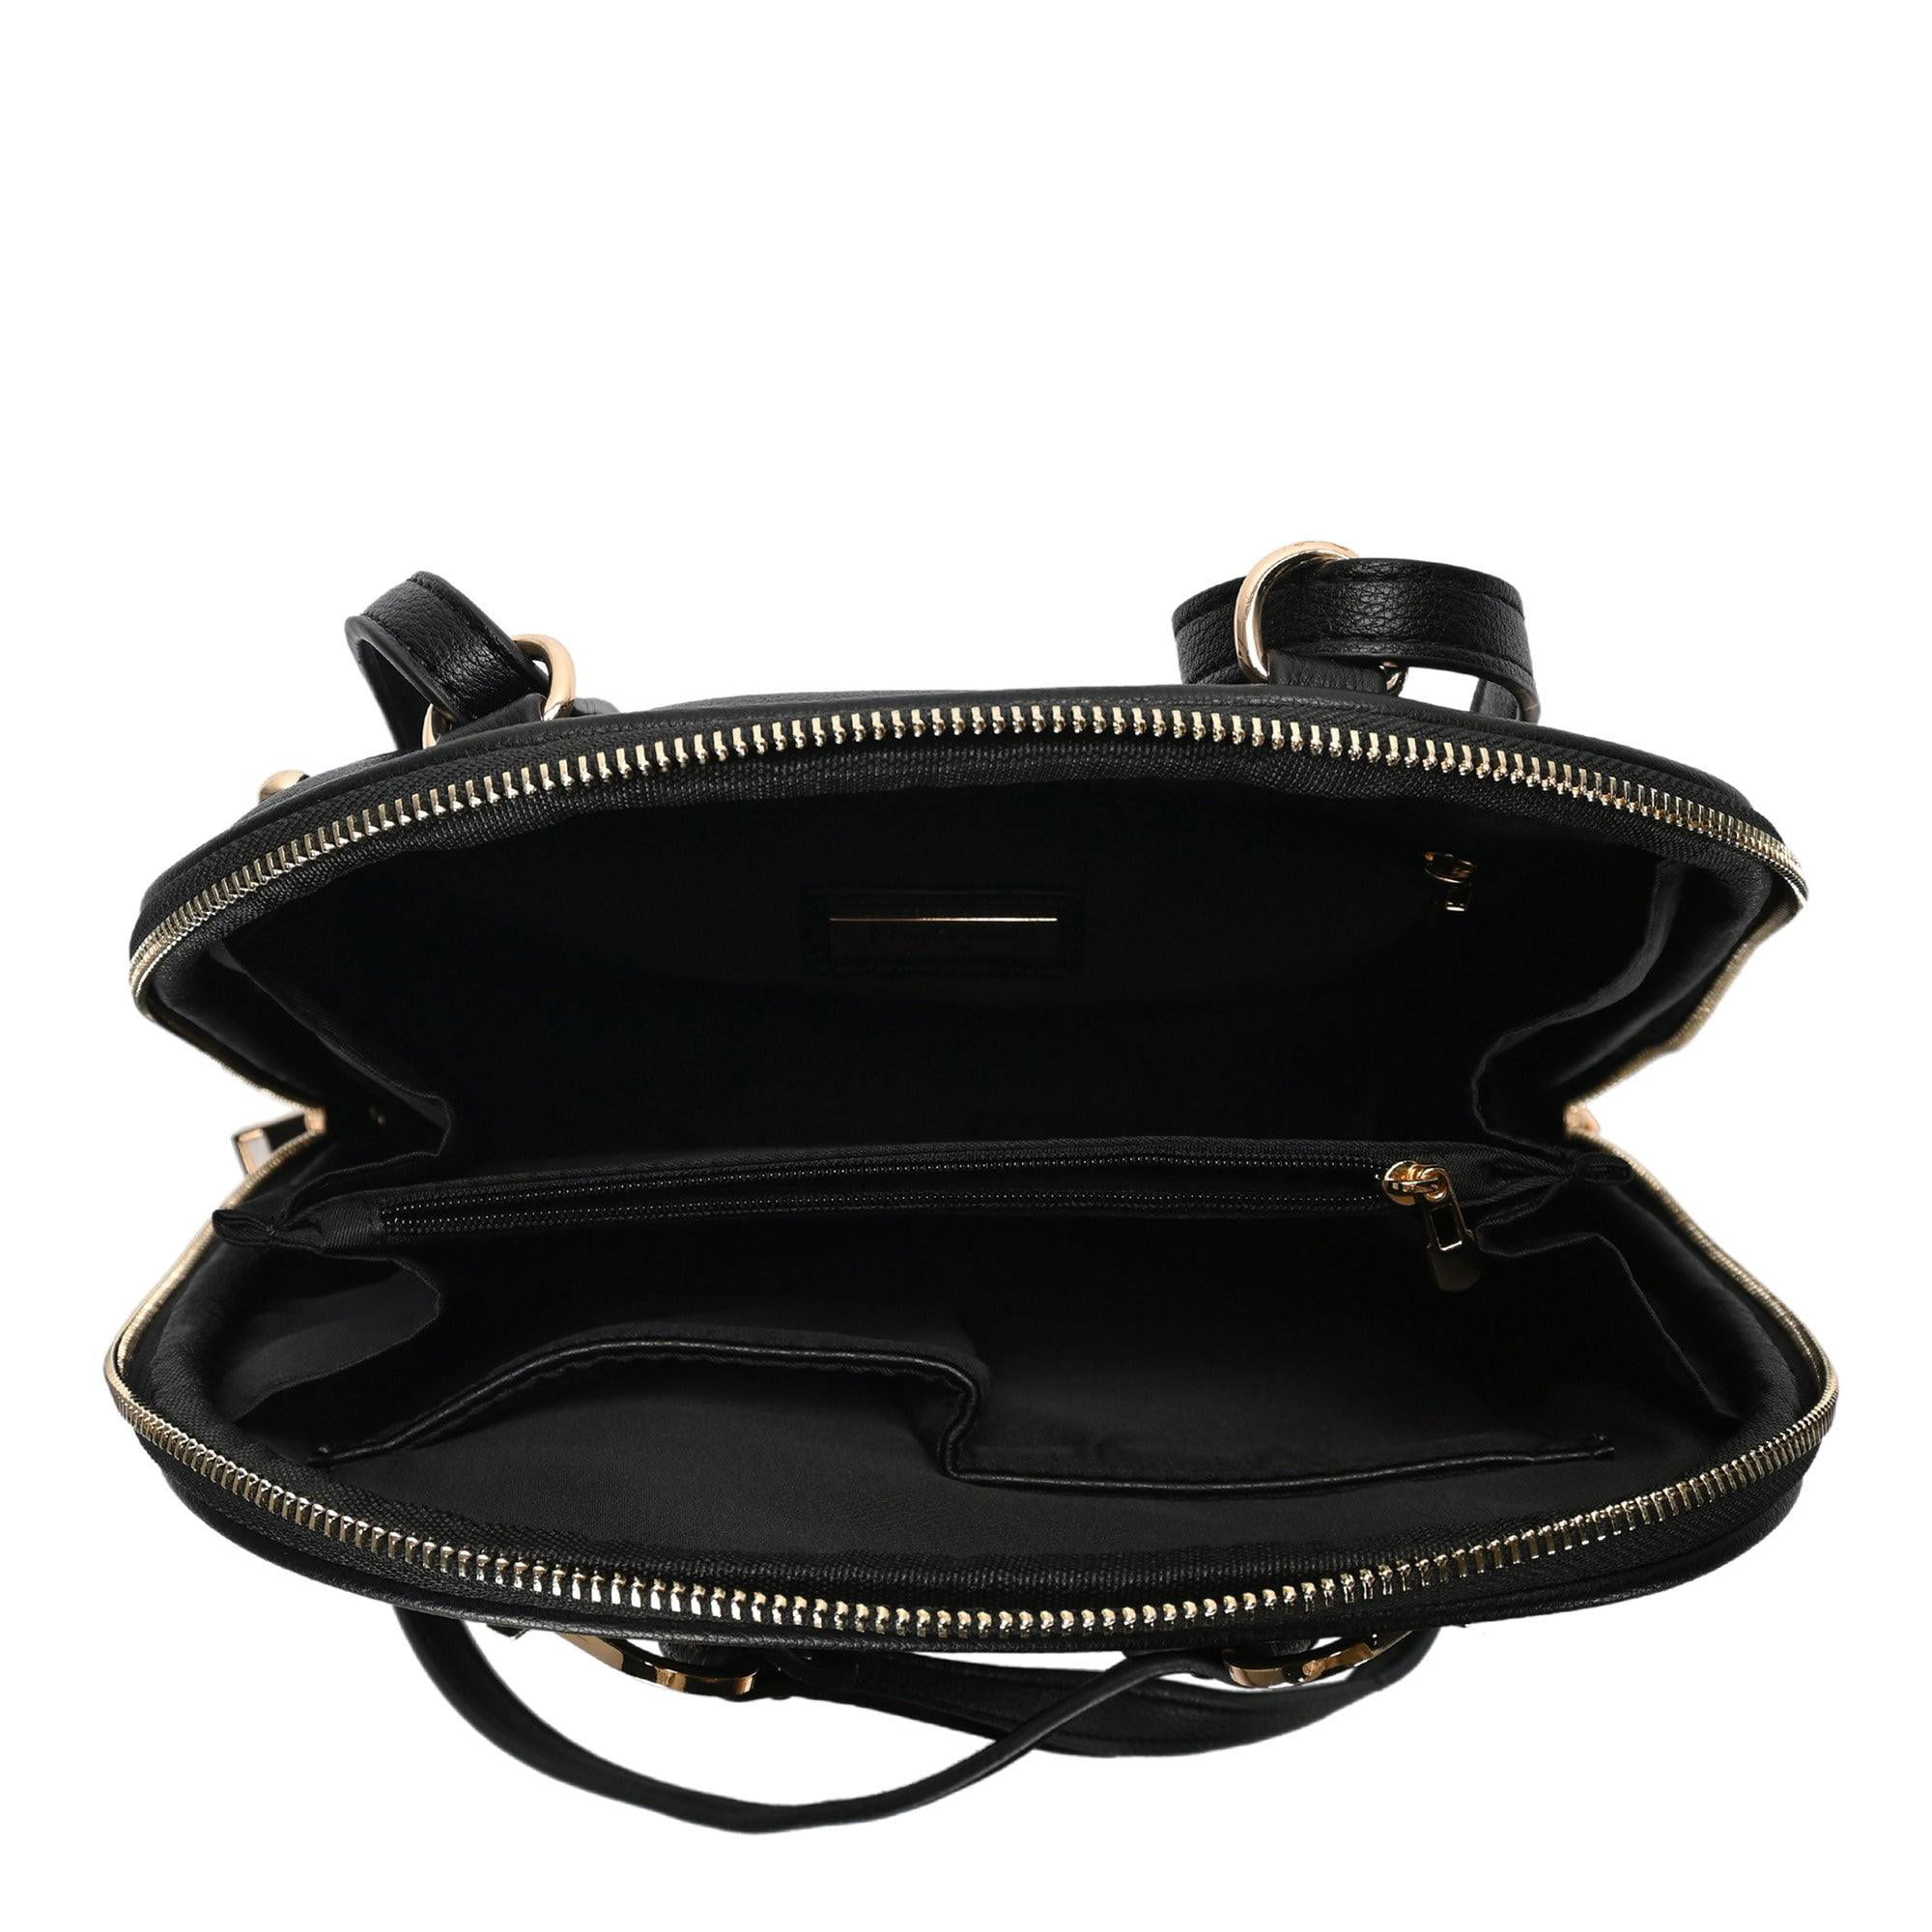 Miztique The Daisy Convertible Backpack Purse for Women, Soft Vegan Leather  Crossbody Bag - Tan 